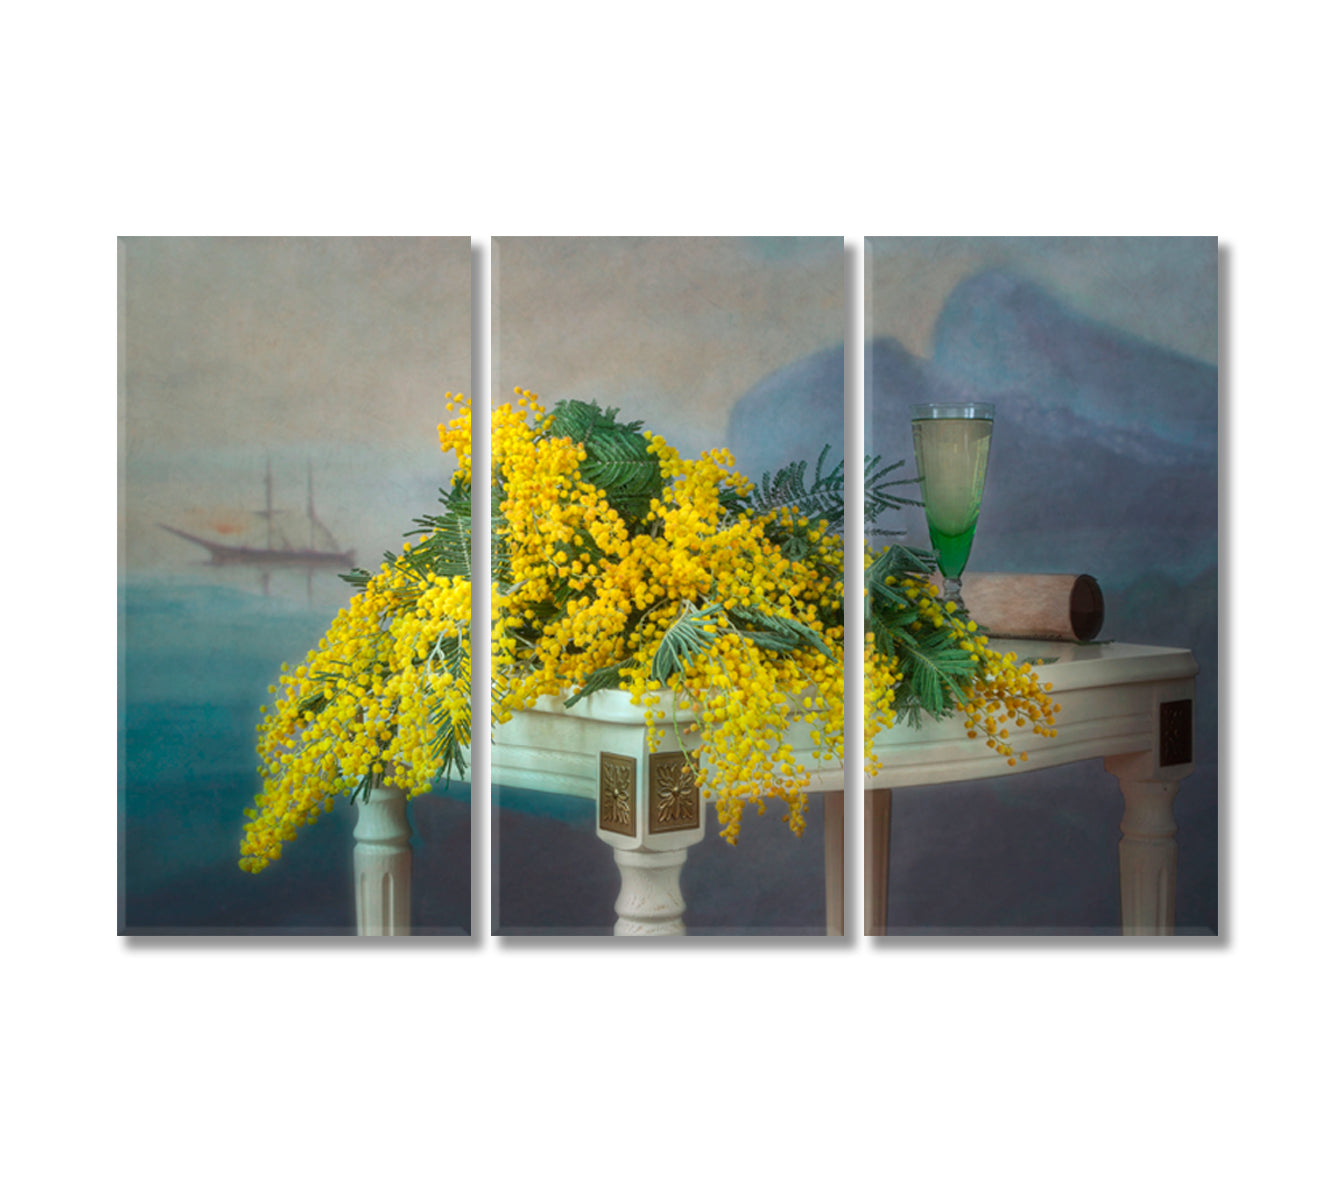 Mimosa Branches Still Life Wall Decor-Canvas Print-CetArt-3 Panels-36x24 inches-CetArt